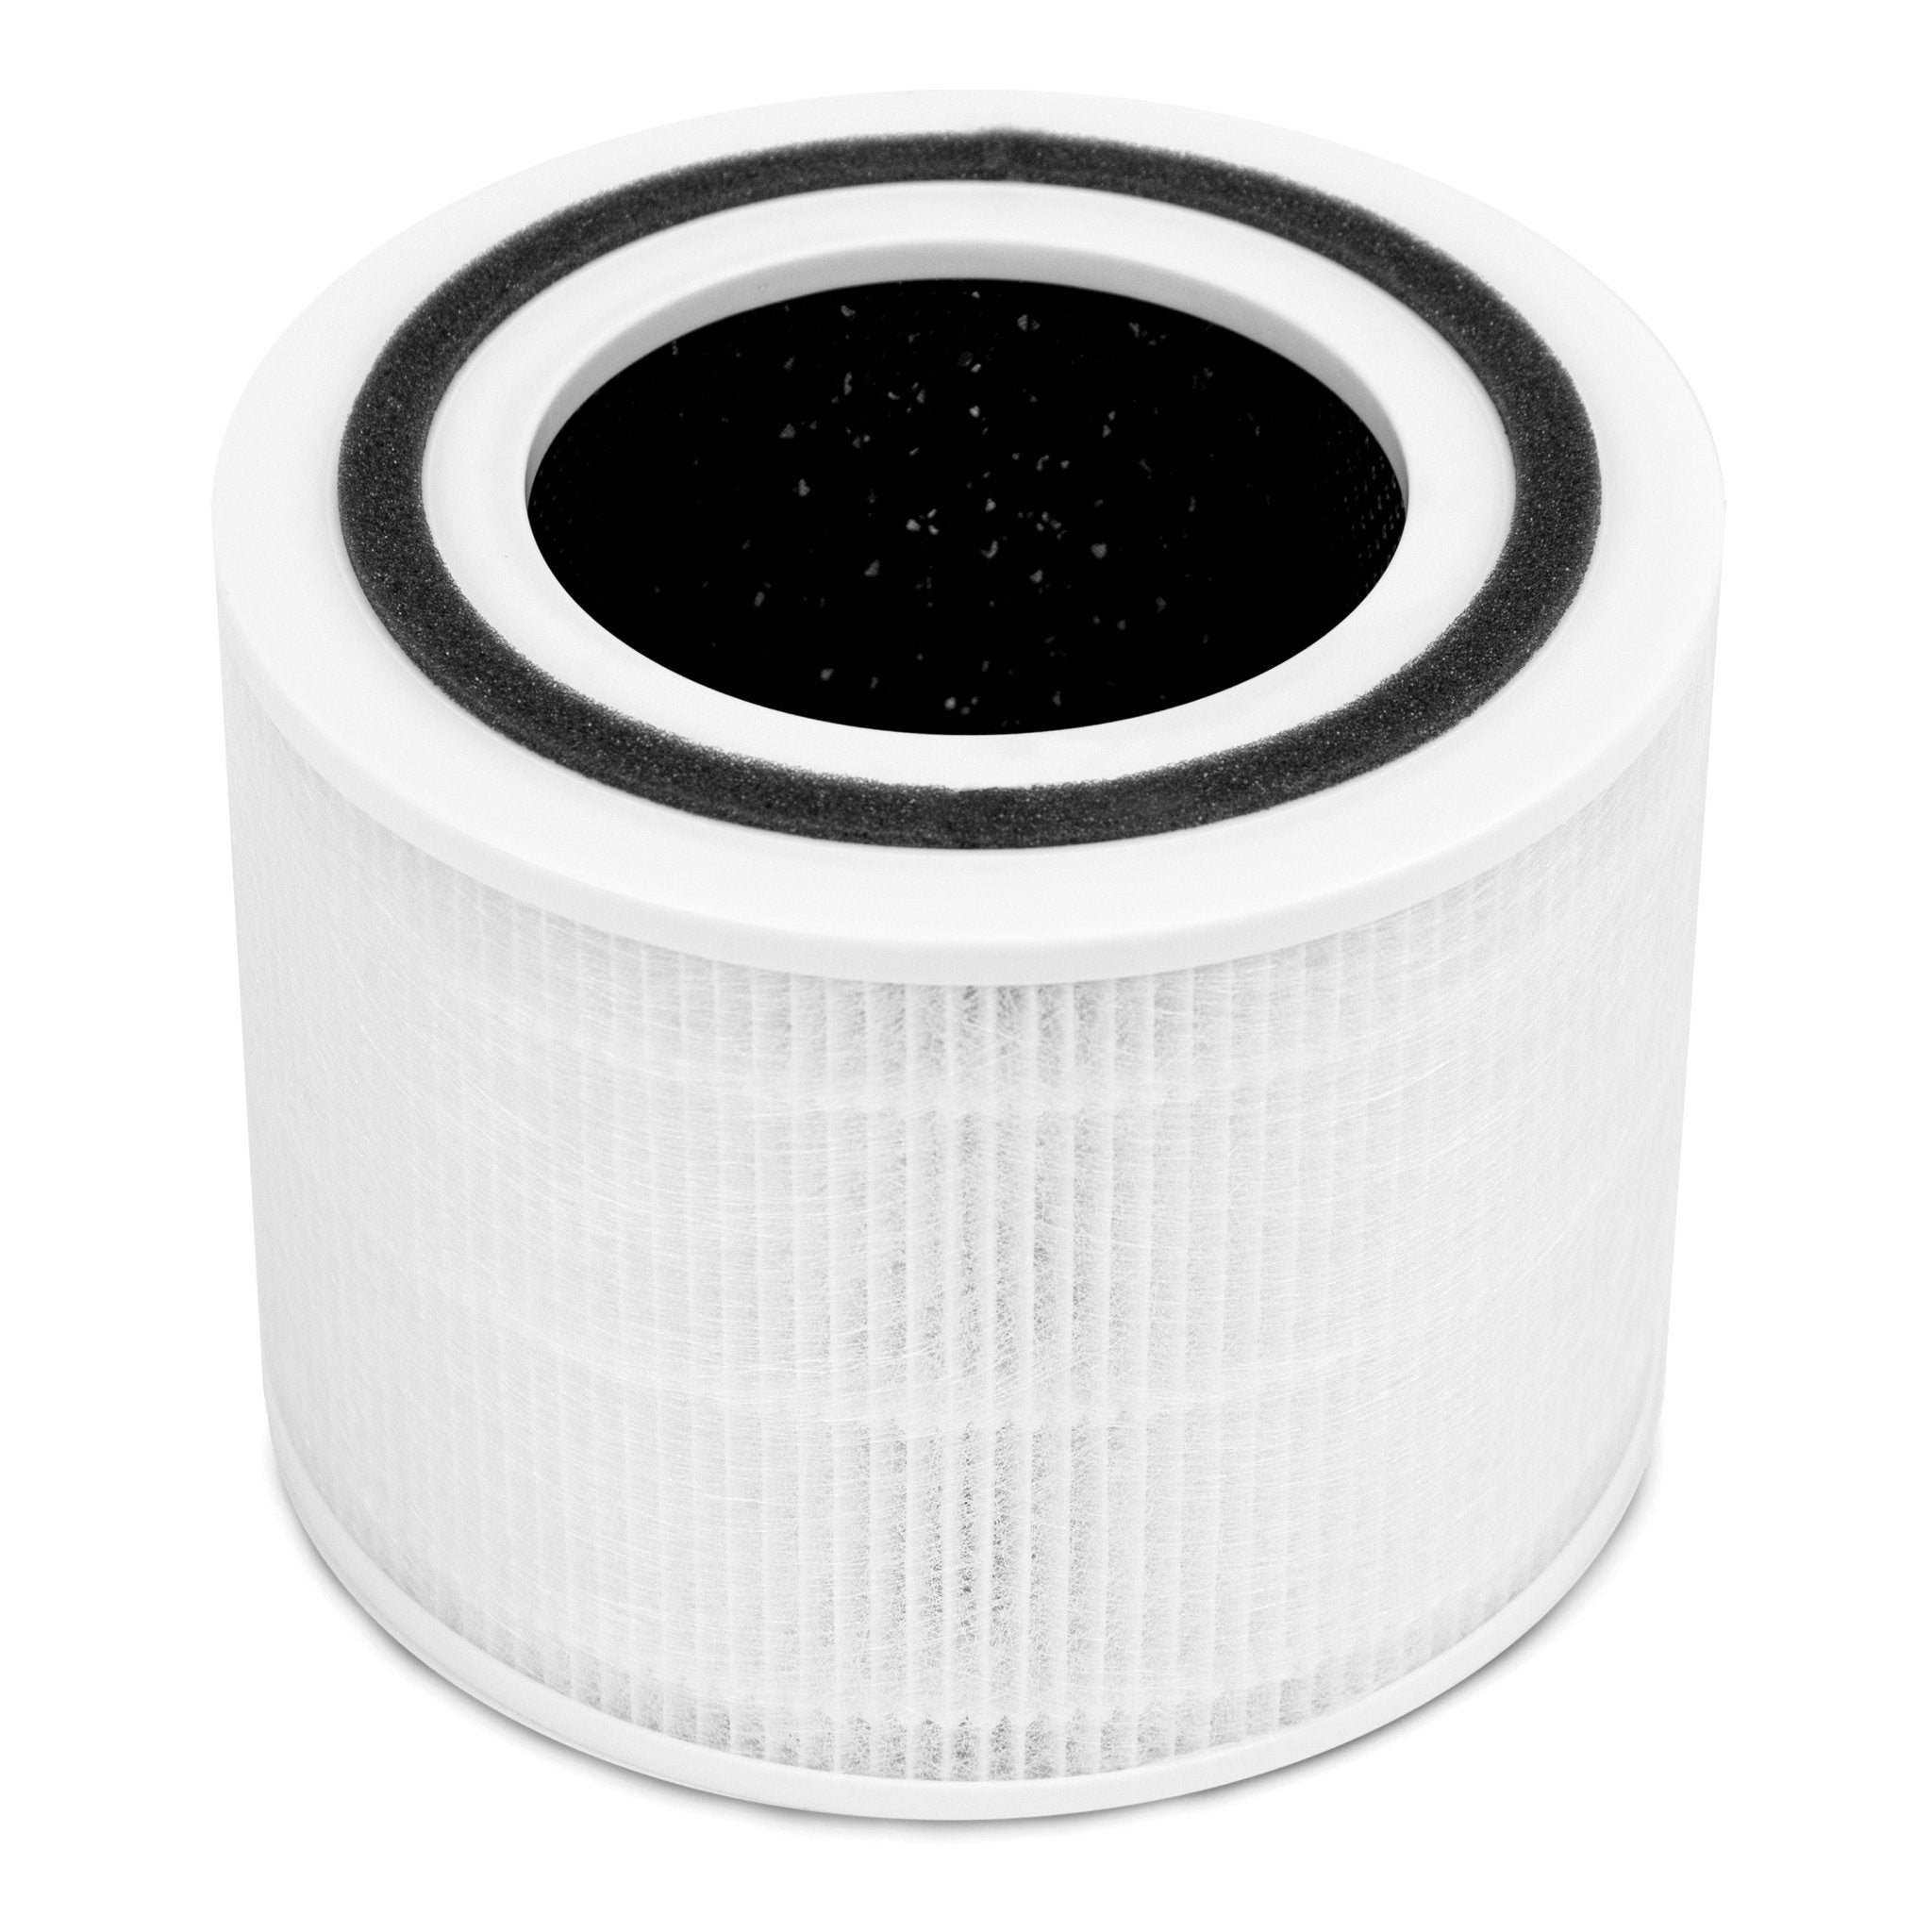 Levoit Core® 300-RF 3-Stage Original Filter